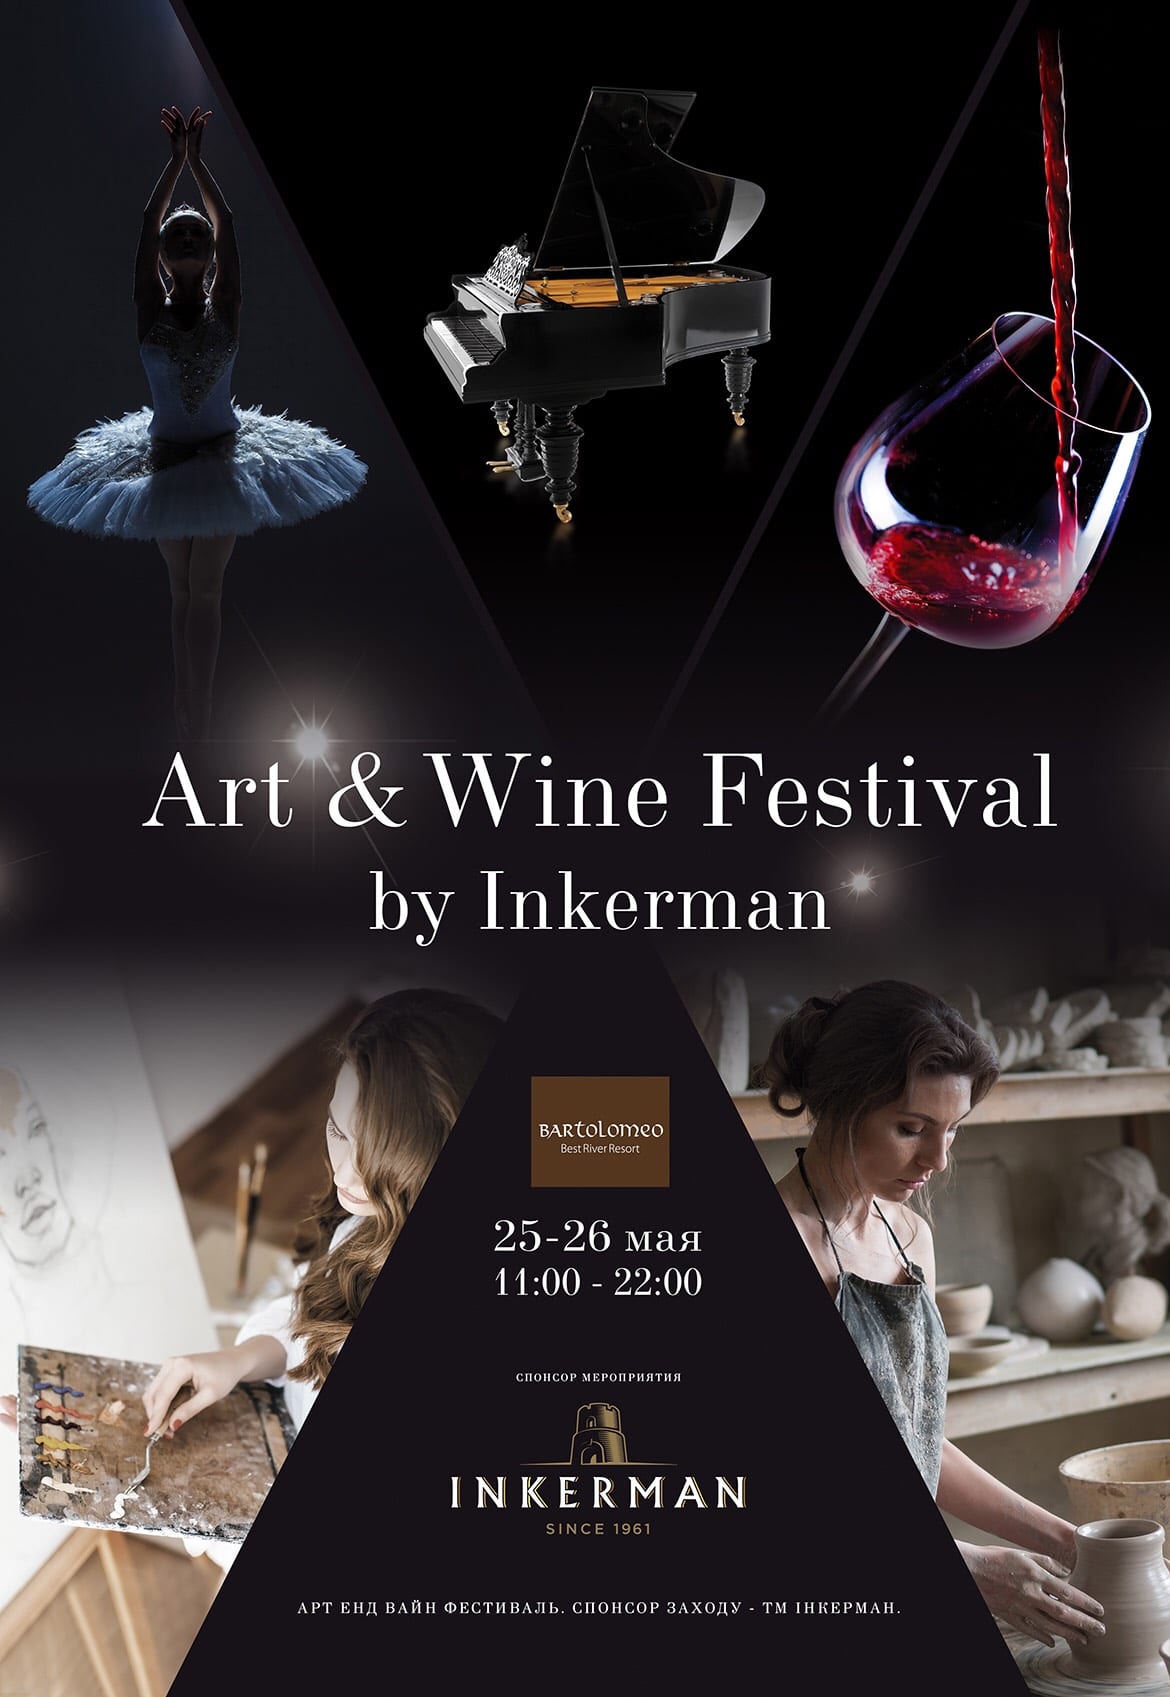 Art&Wine Festival by Inkerman Днепр, 25.05.2019, цена, купить билеты. Афиша Днепра